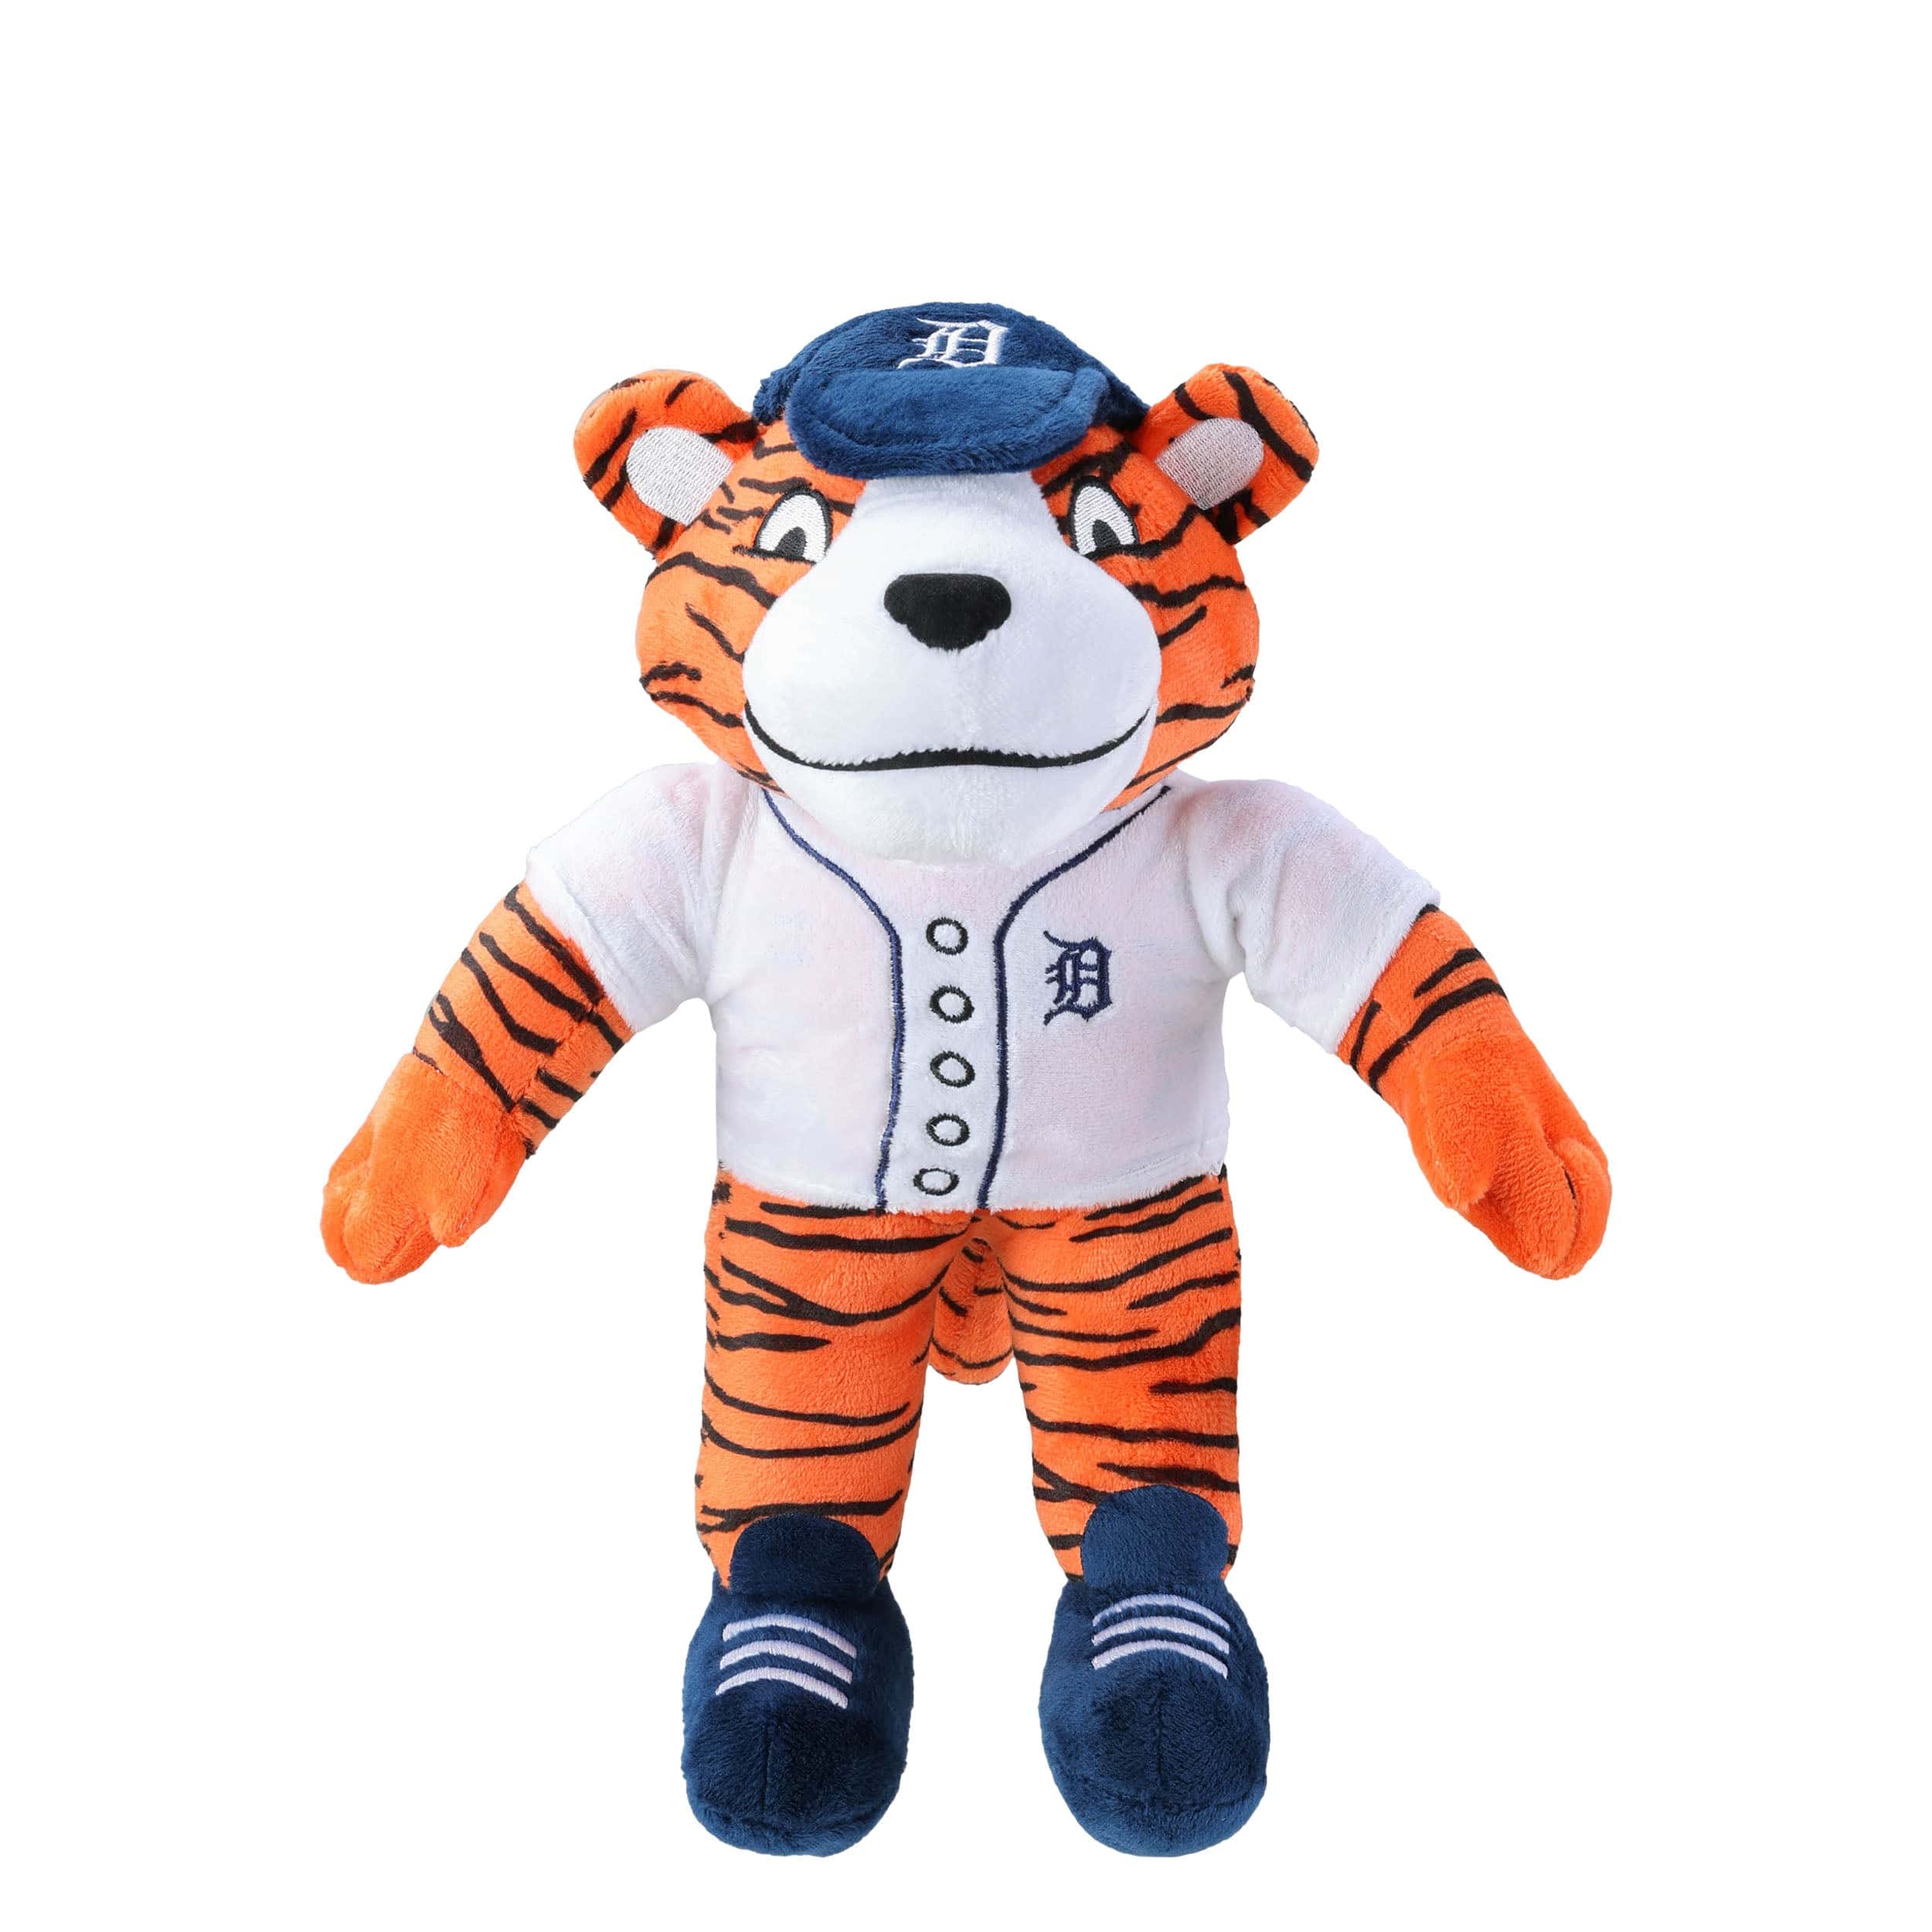 Lubies MLB Detroit Tigers Plush - Entertainment Earth